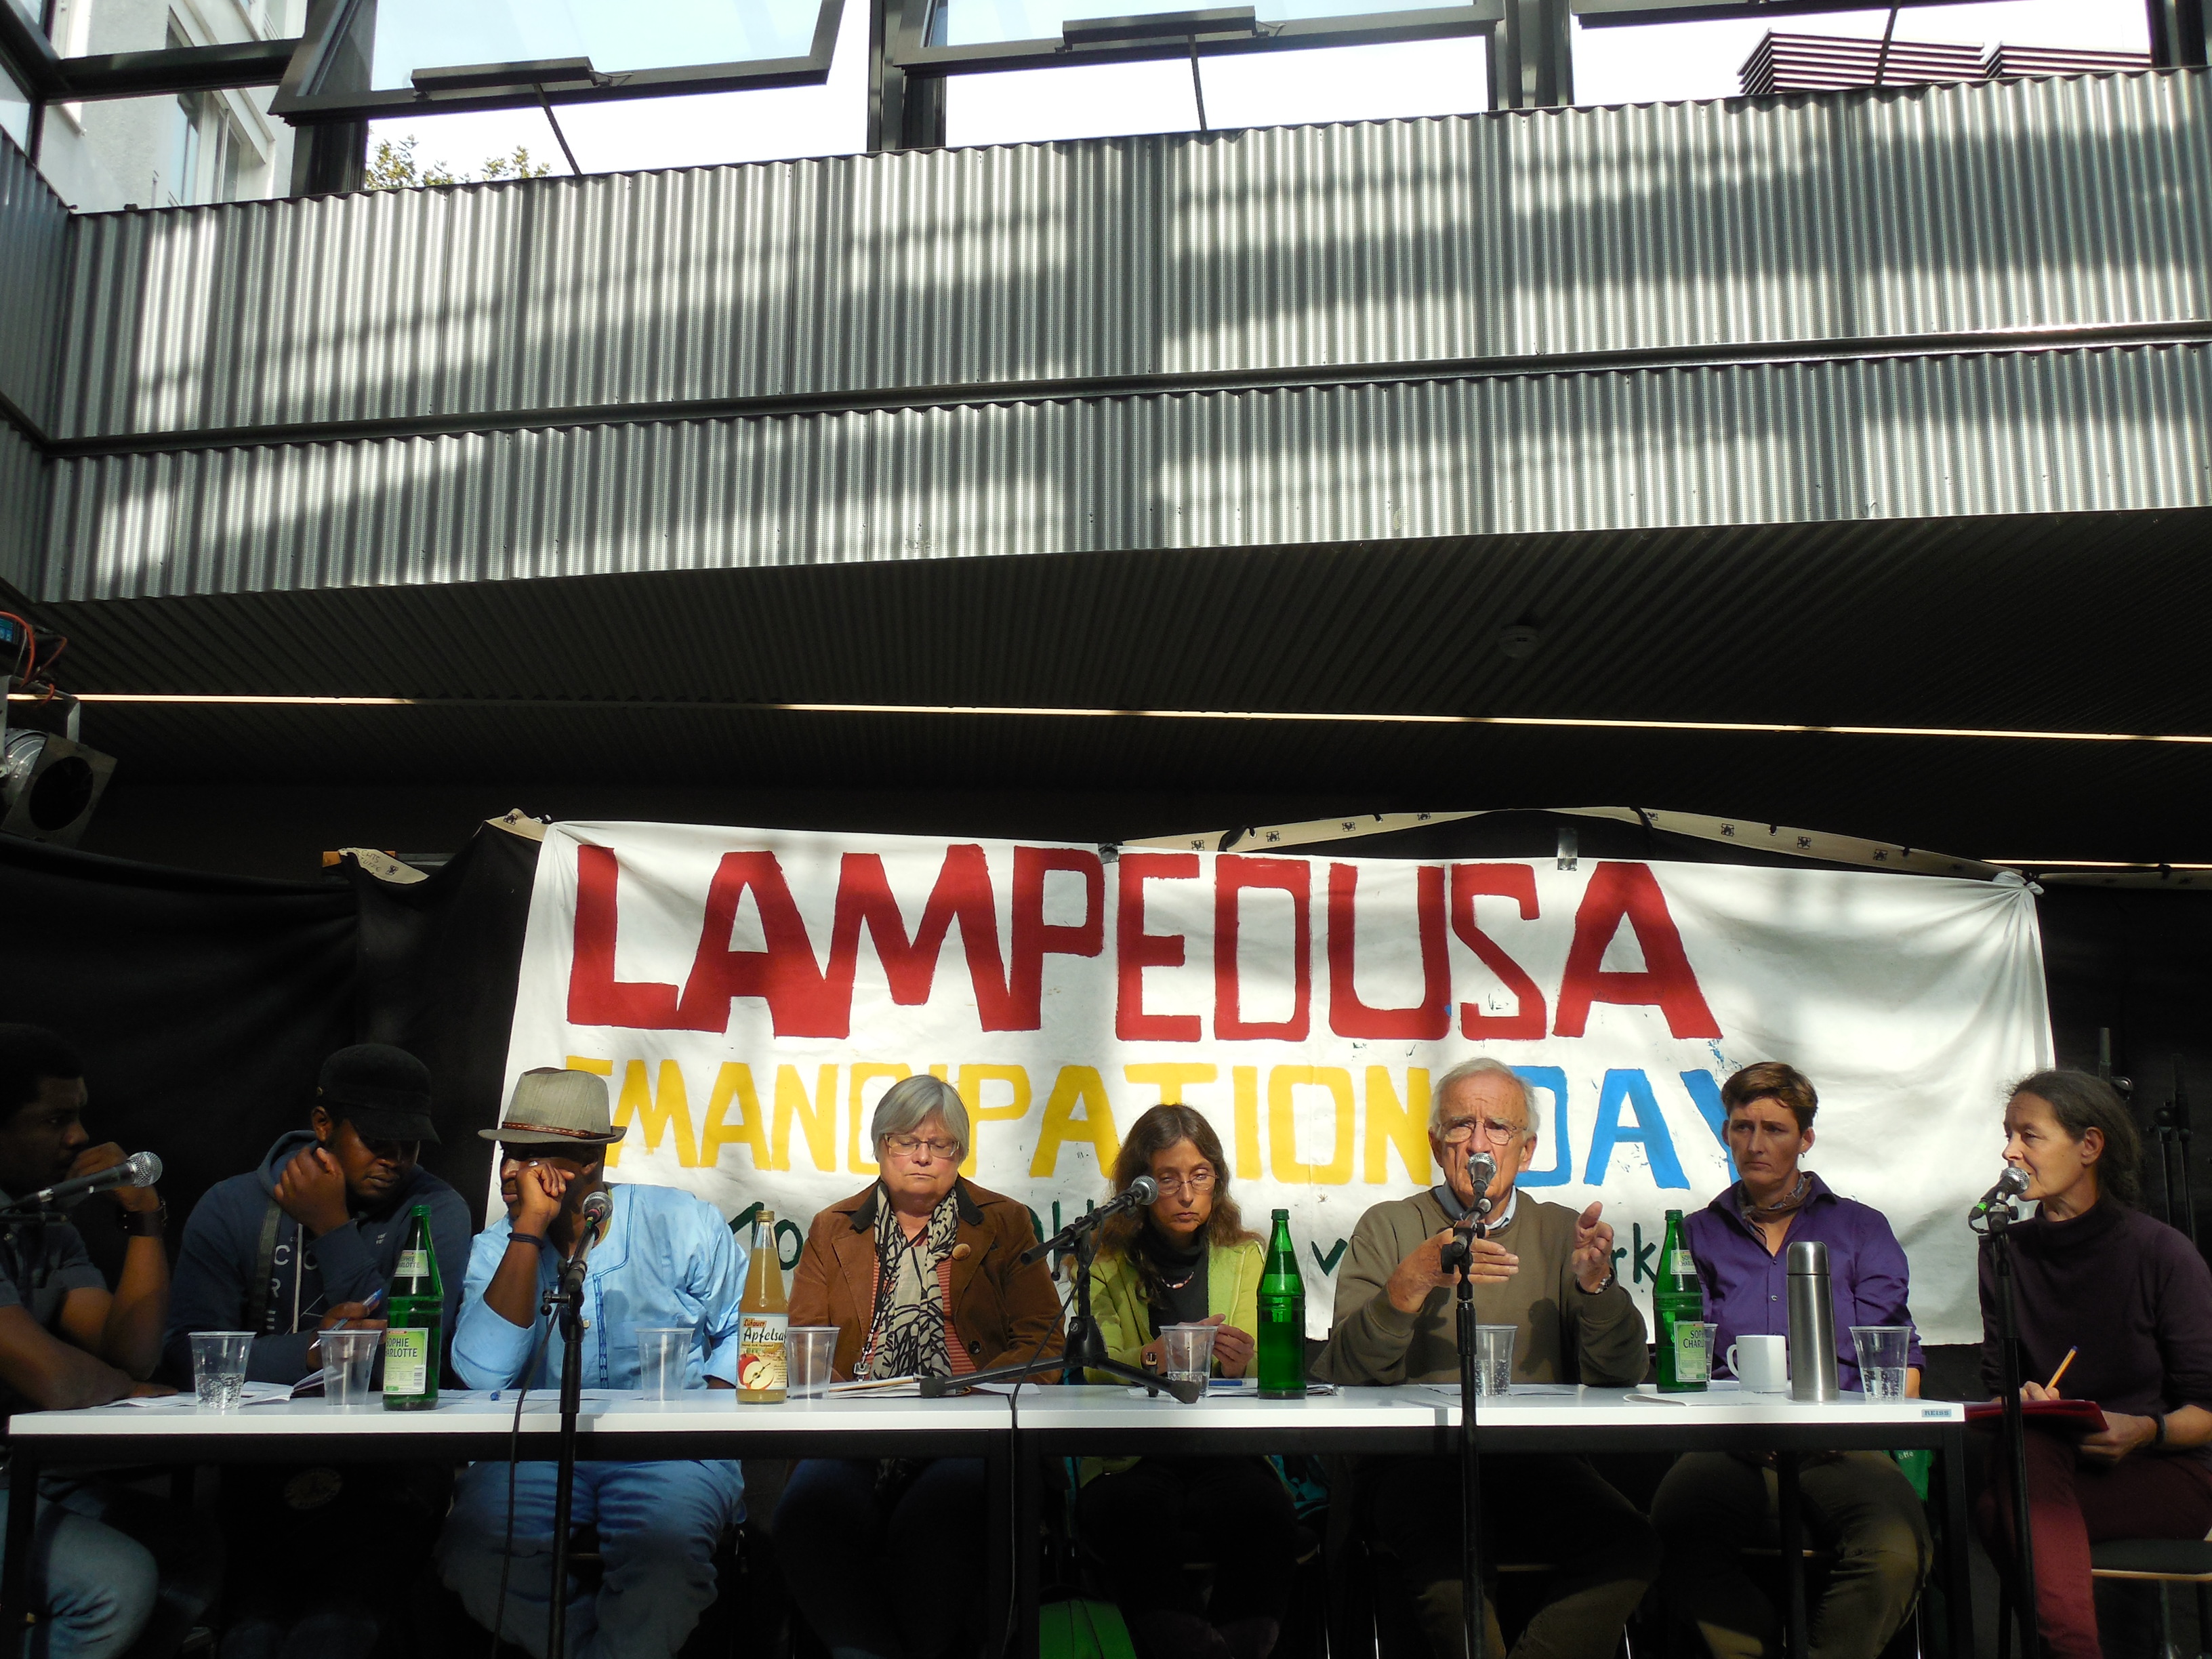 Lampedusa in Hamburg Diskussion Oktober 2014